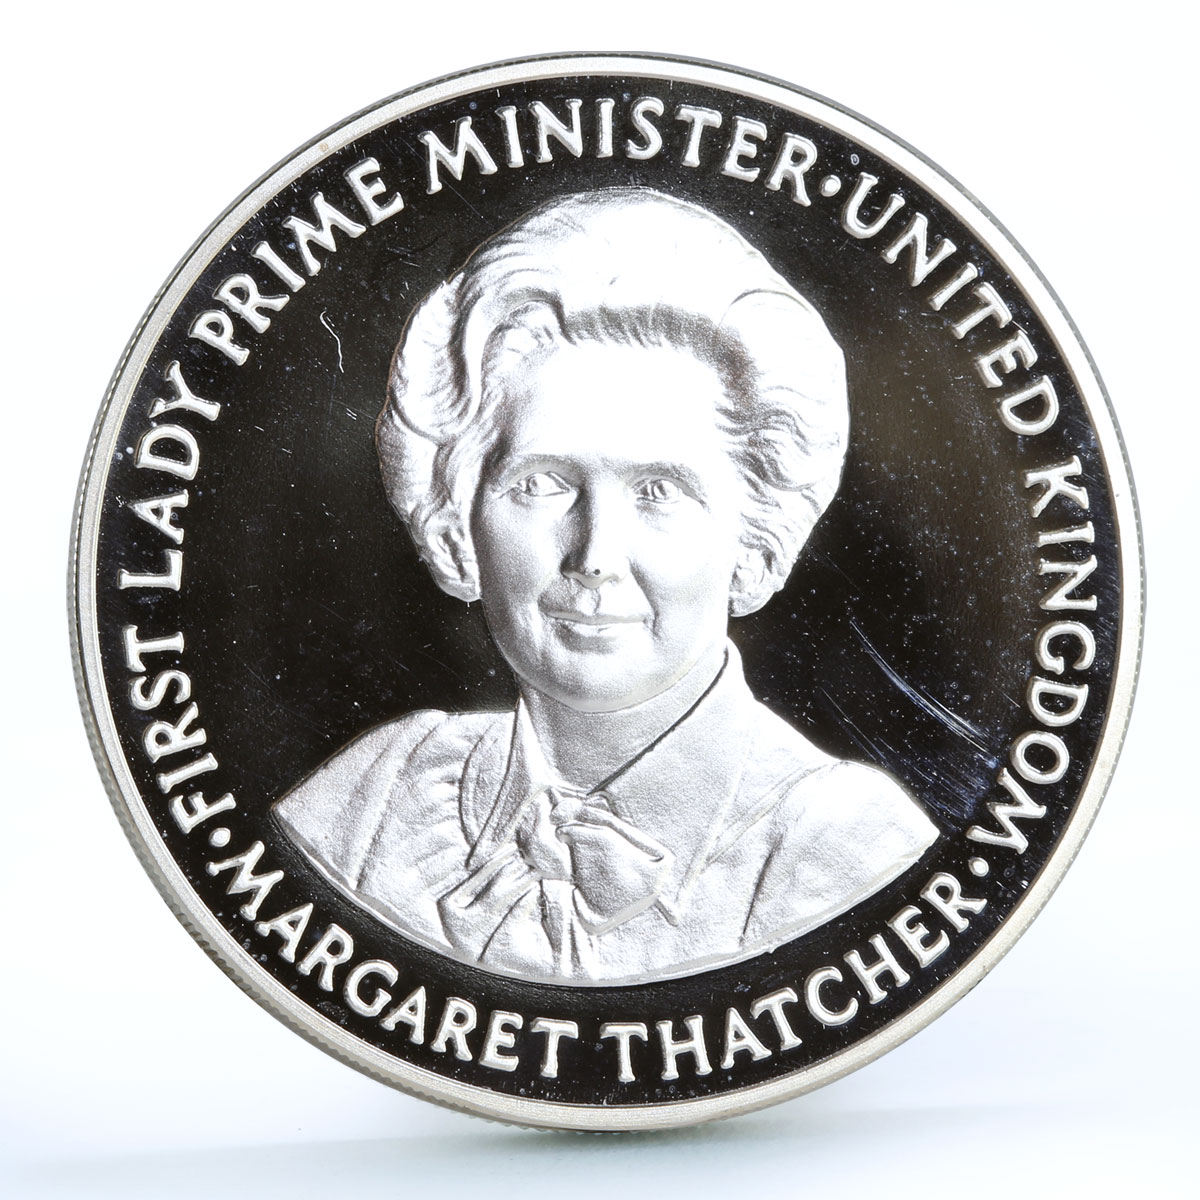 Britain 1st Lady Prime Minister Margaret Thatcher Woman Lion Ag medal coin 1979